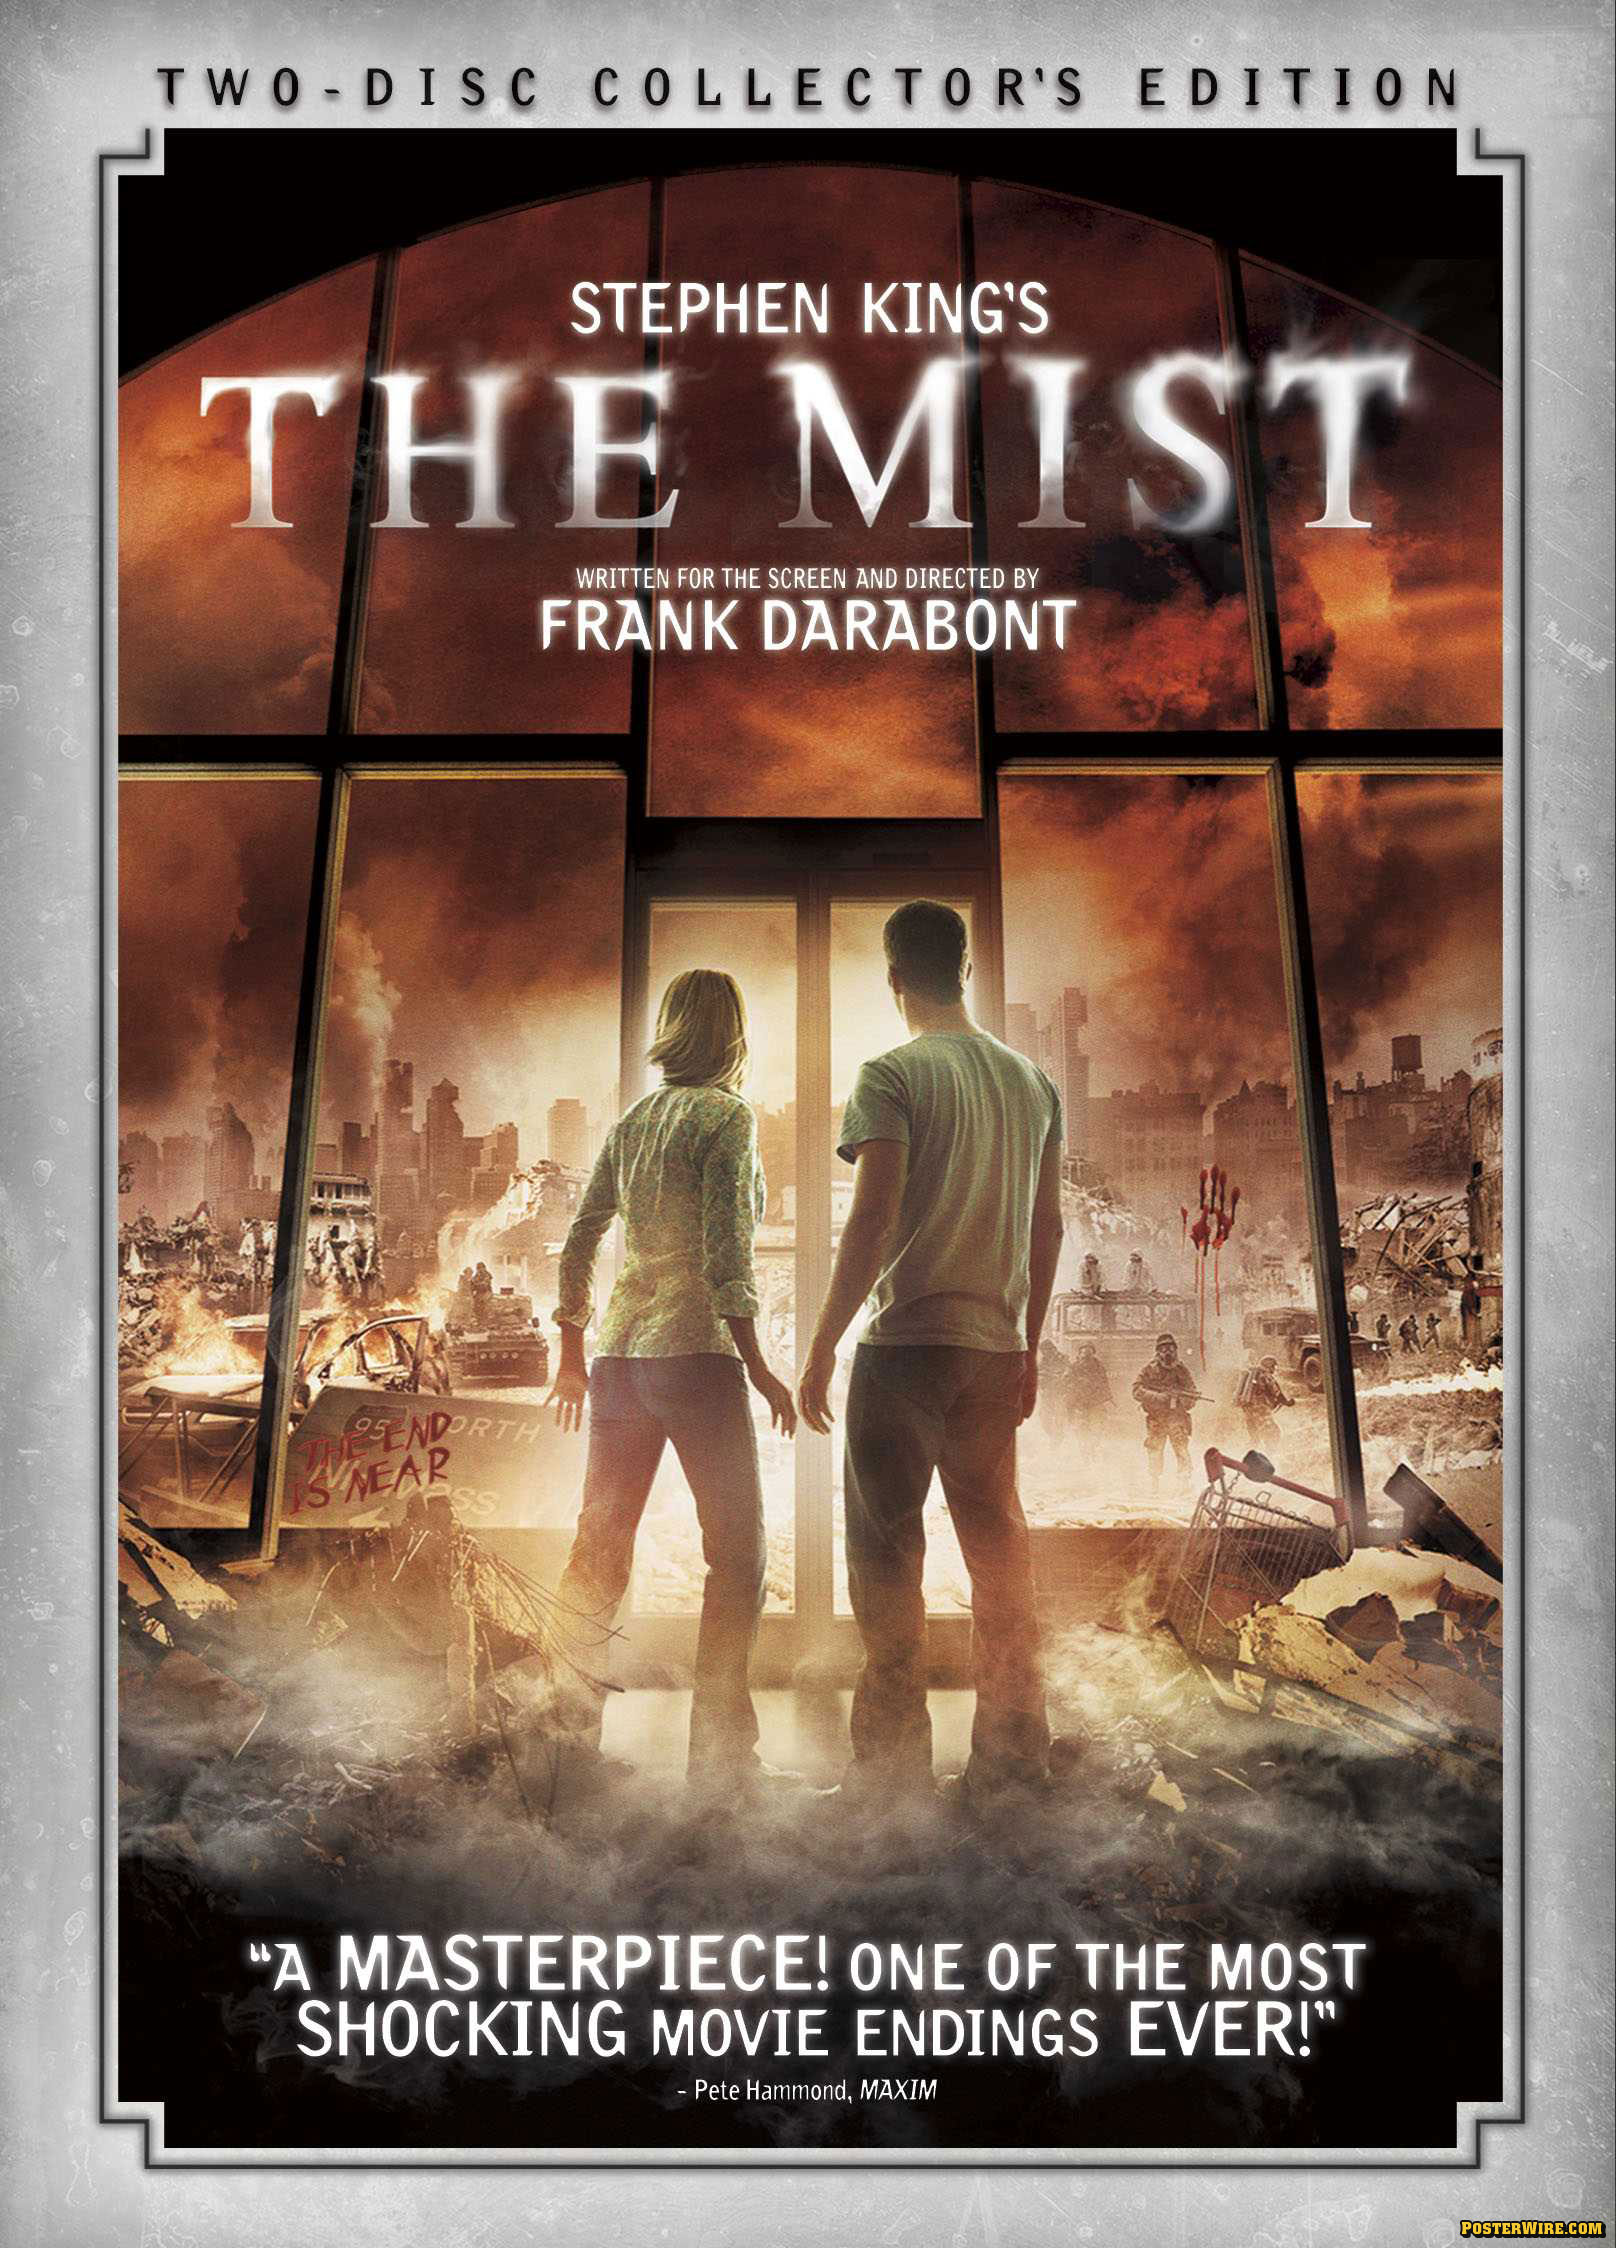 The Mist DVD poster